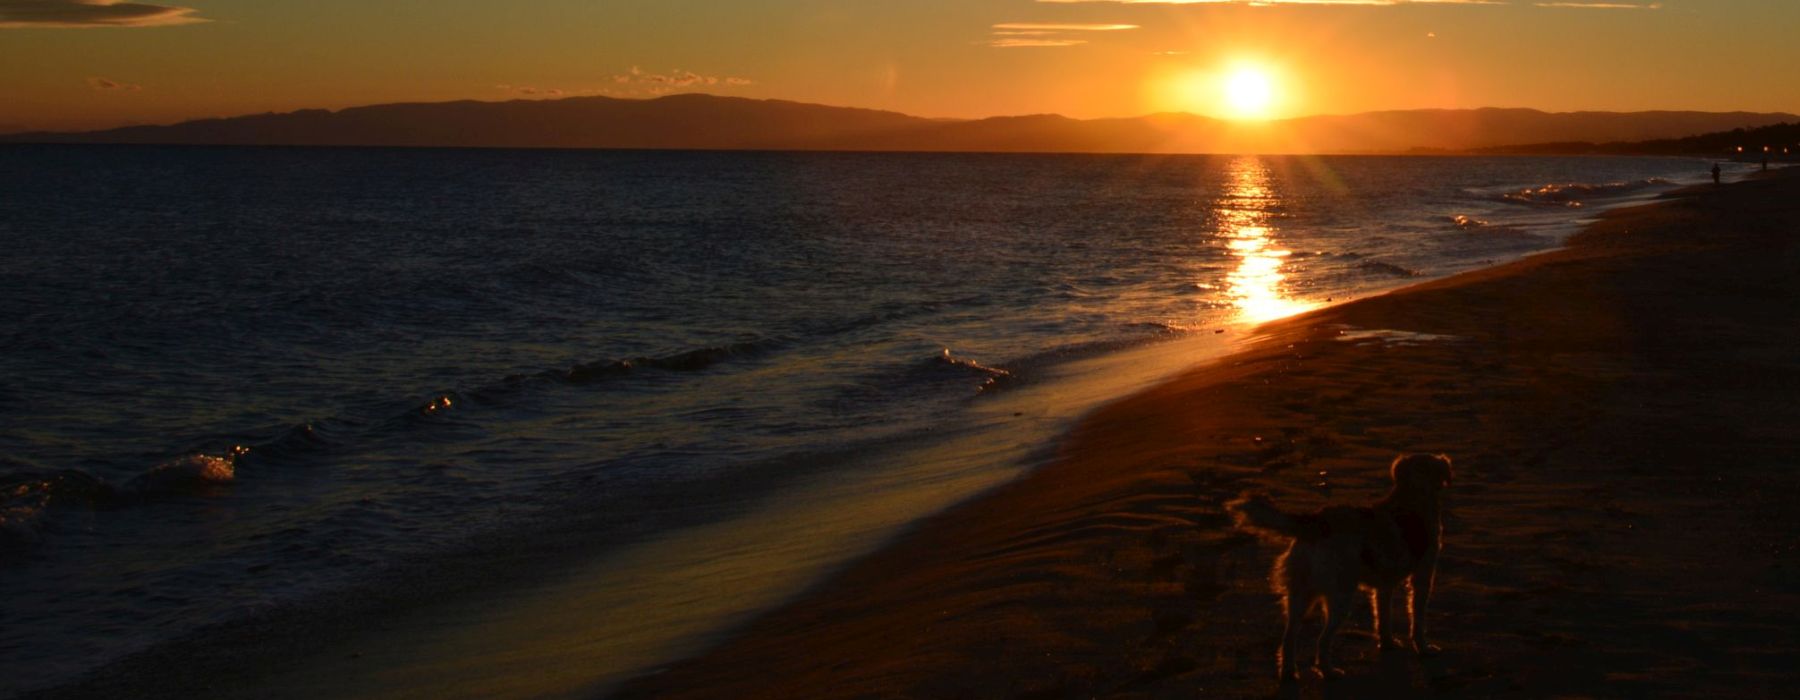 sunset beach spiaggia tramonto calabria